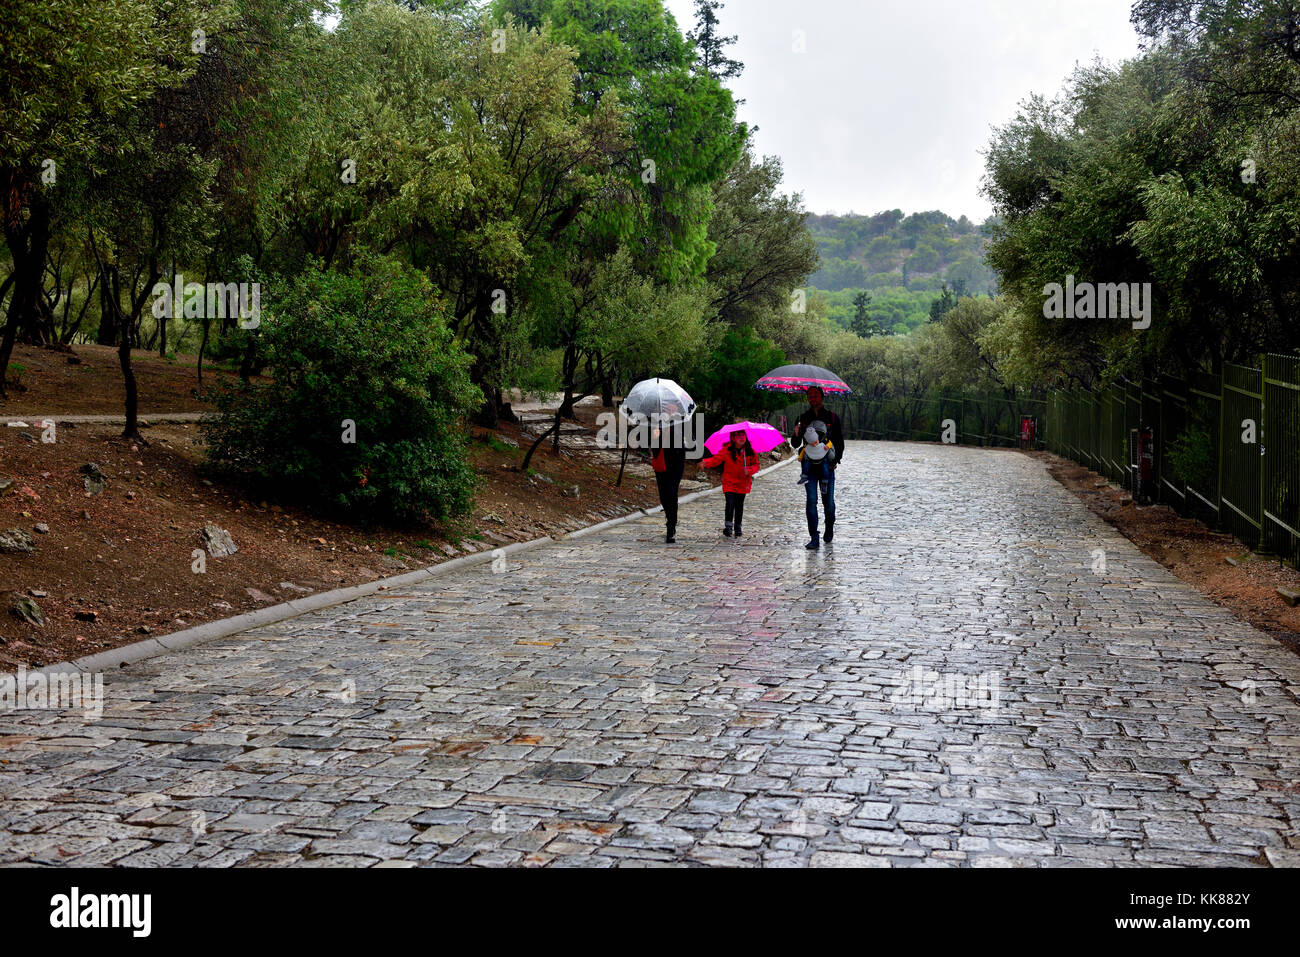 Three people with umbrellas on stone pathway in rain Stock Photo